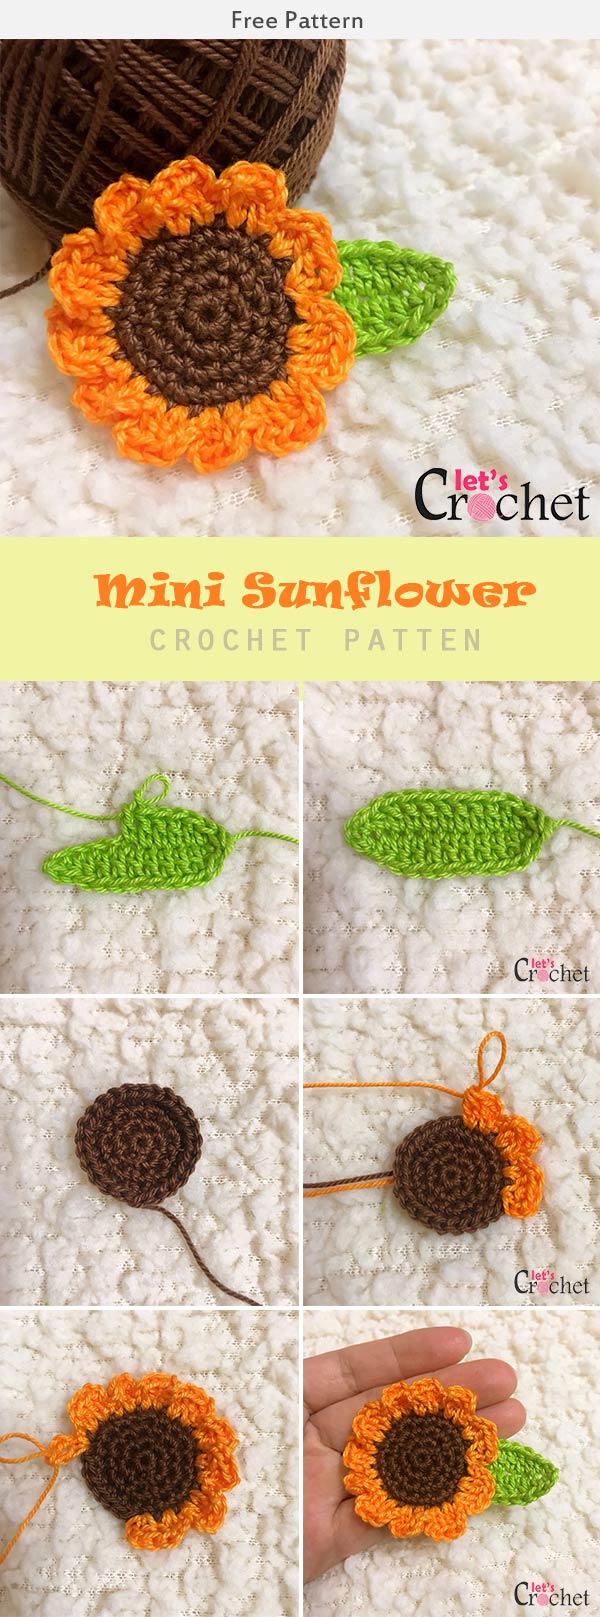 Mini Sunflower Crochet Free Pattern